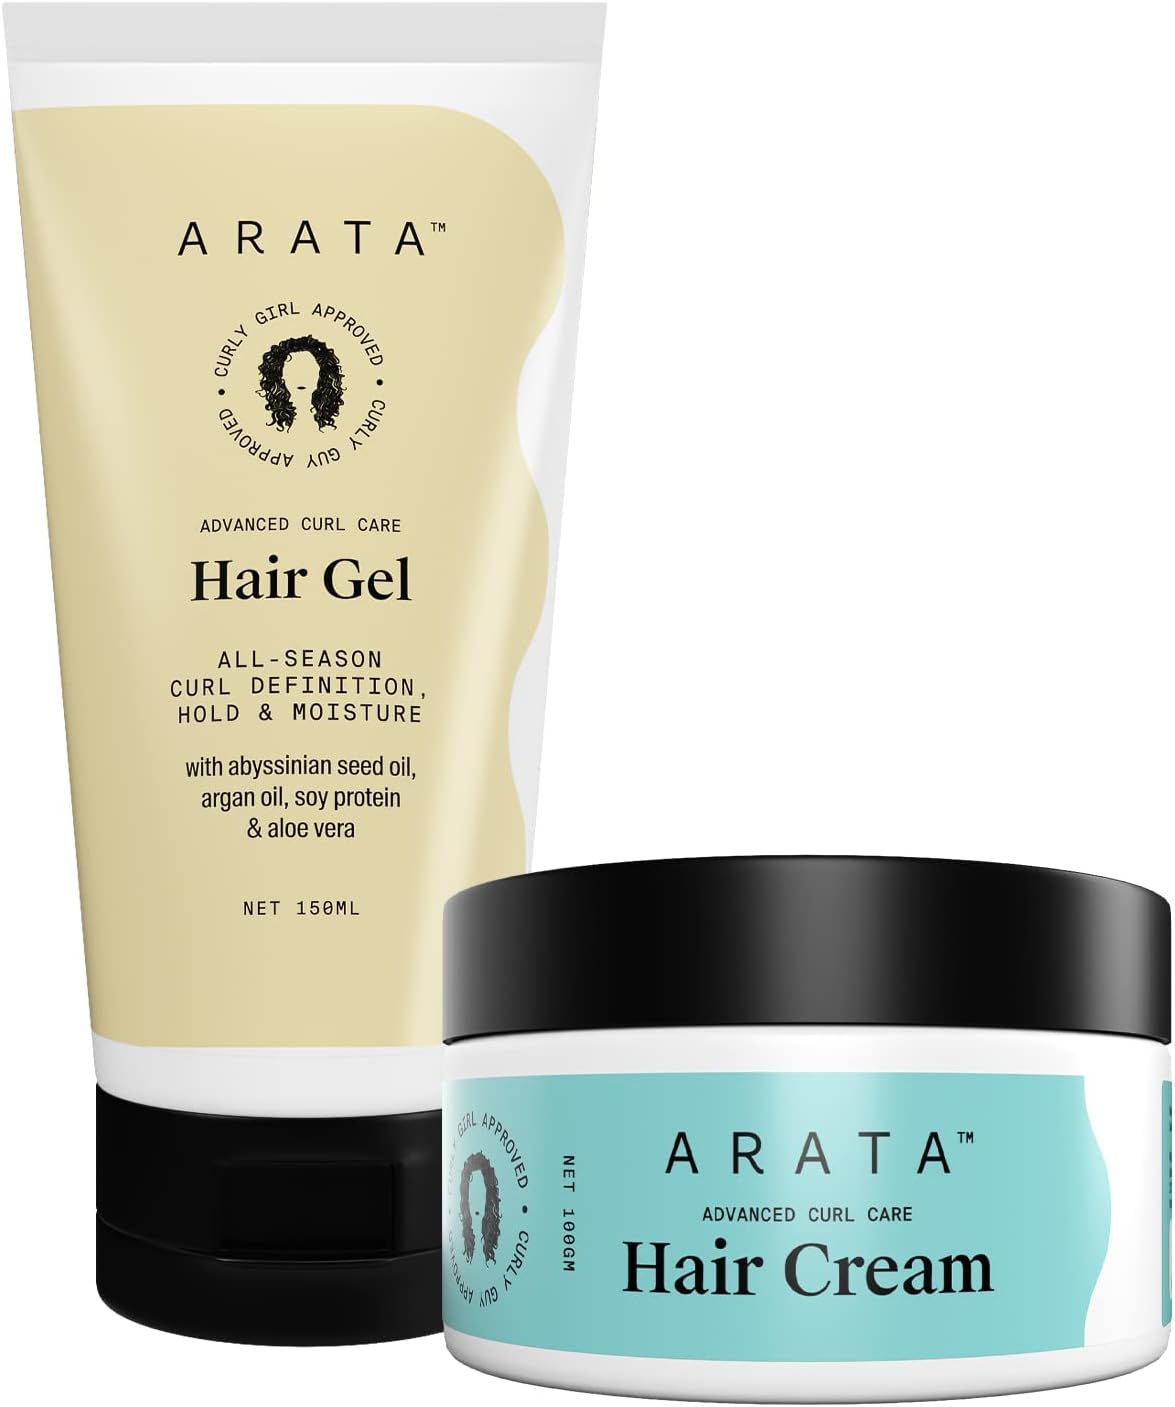 ARATA Natural Curl Hair Styling Combo with Hair Gel & Hair Cream